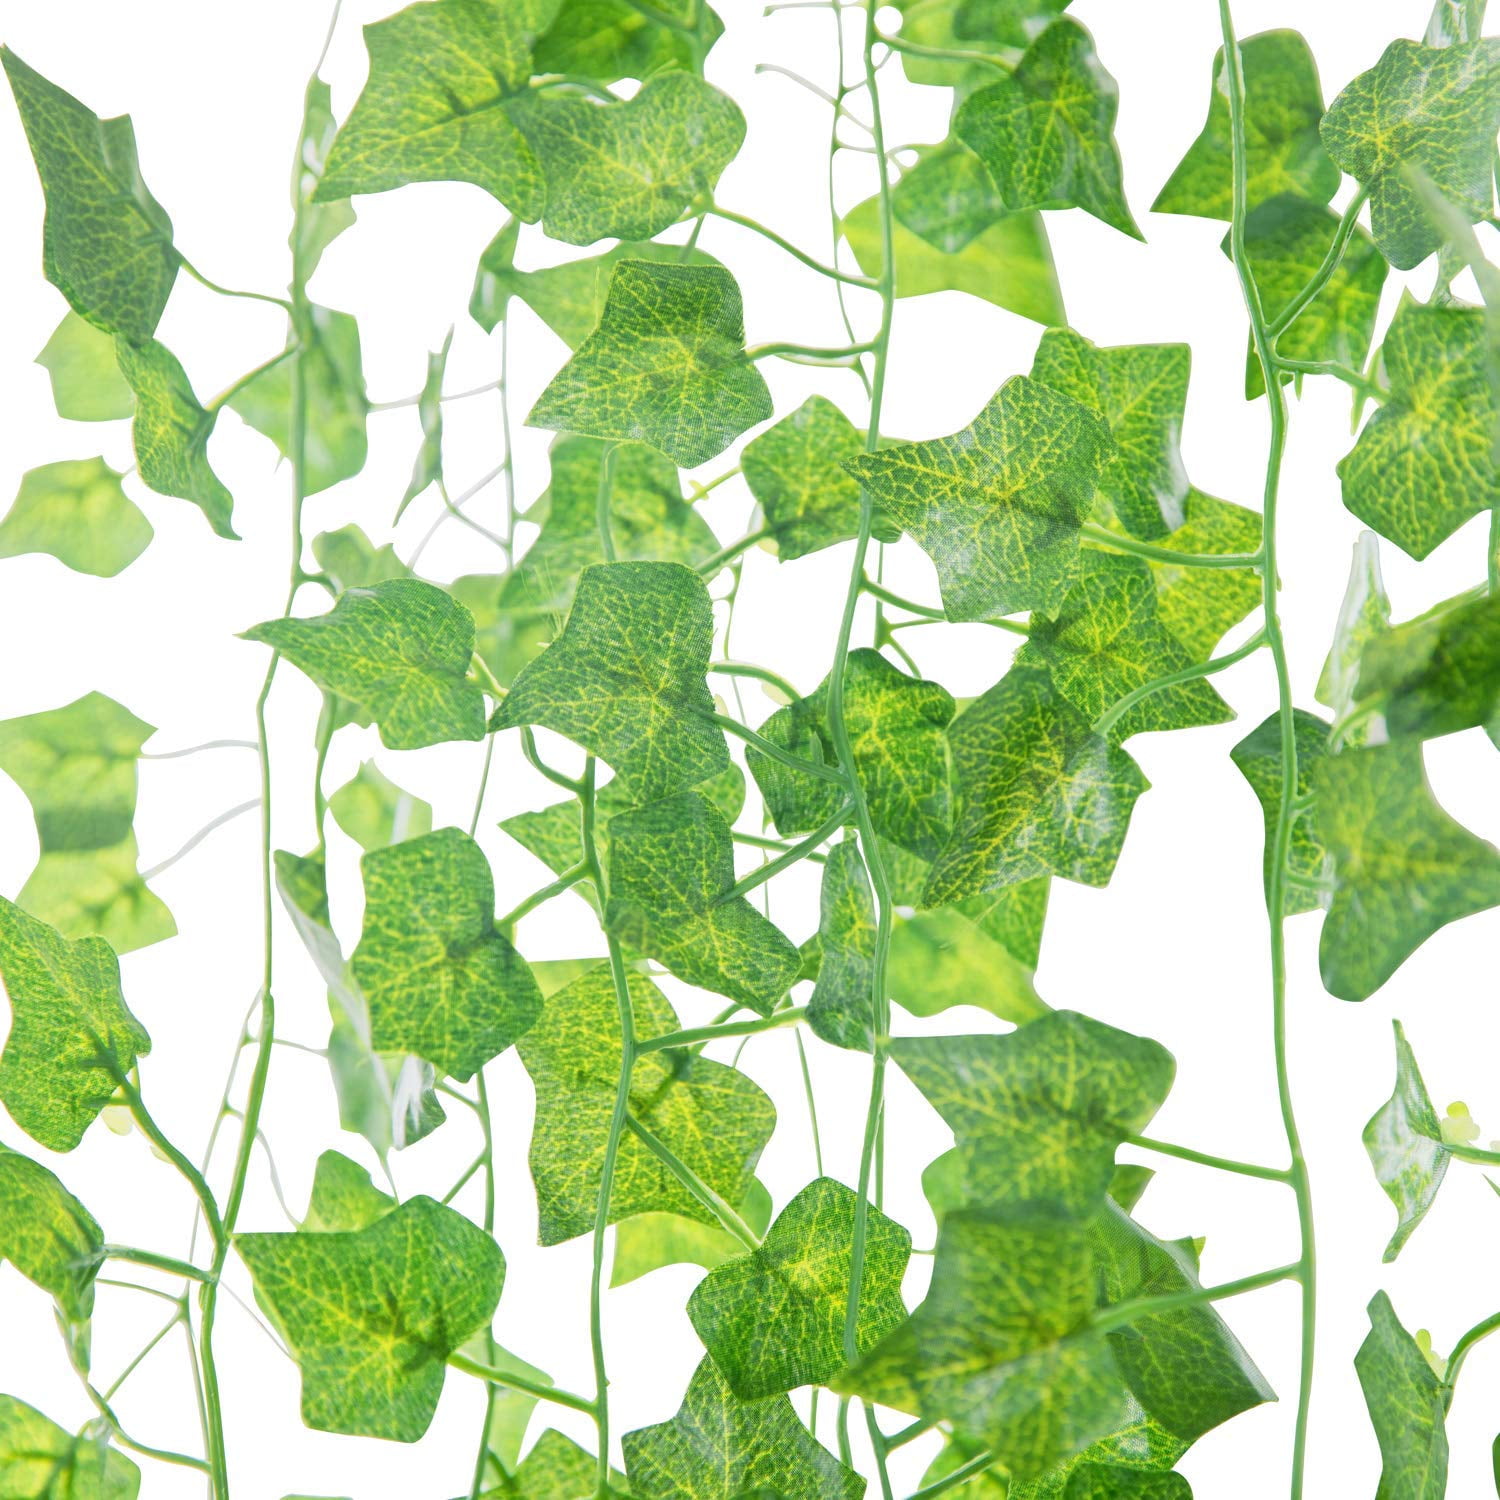 Artificial Ivy Leaf  Green Plants Hanging Garland Plant Vine Foliage Home Decor1